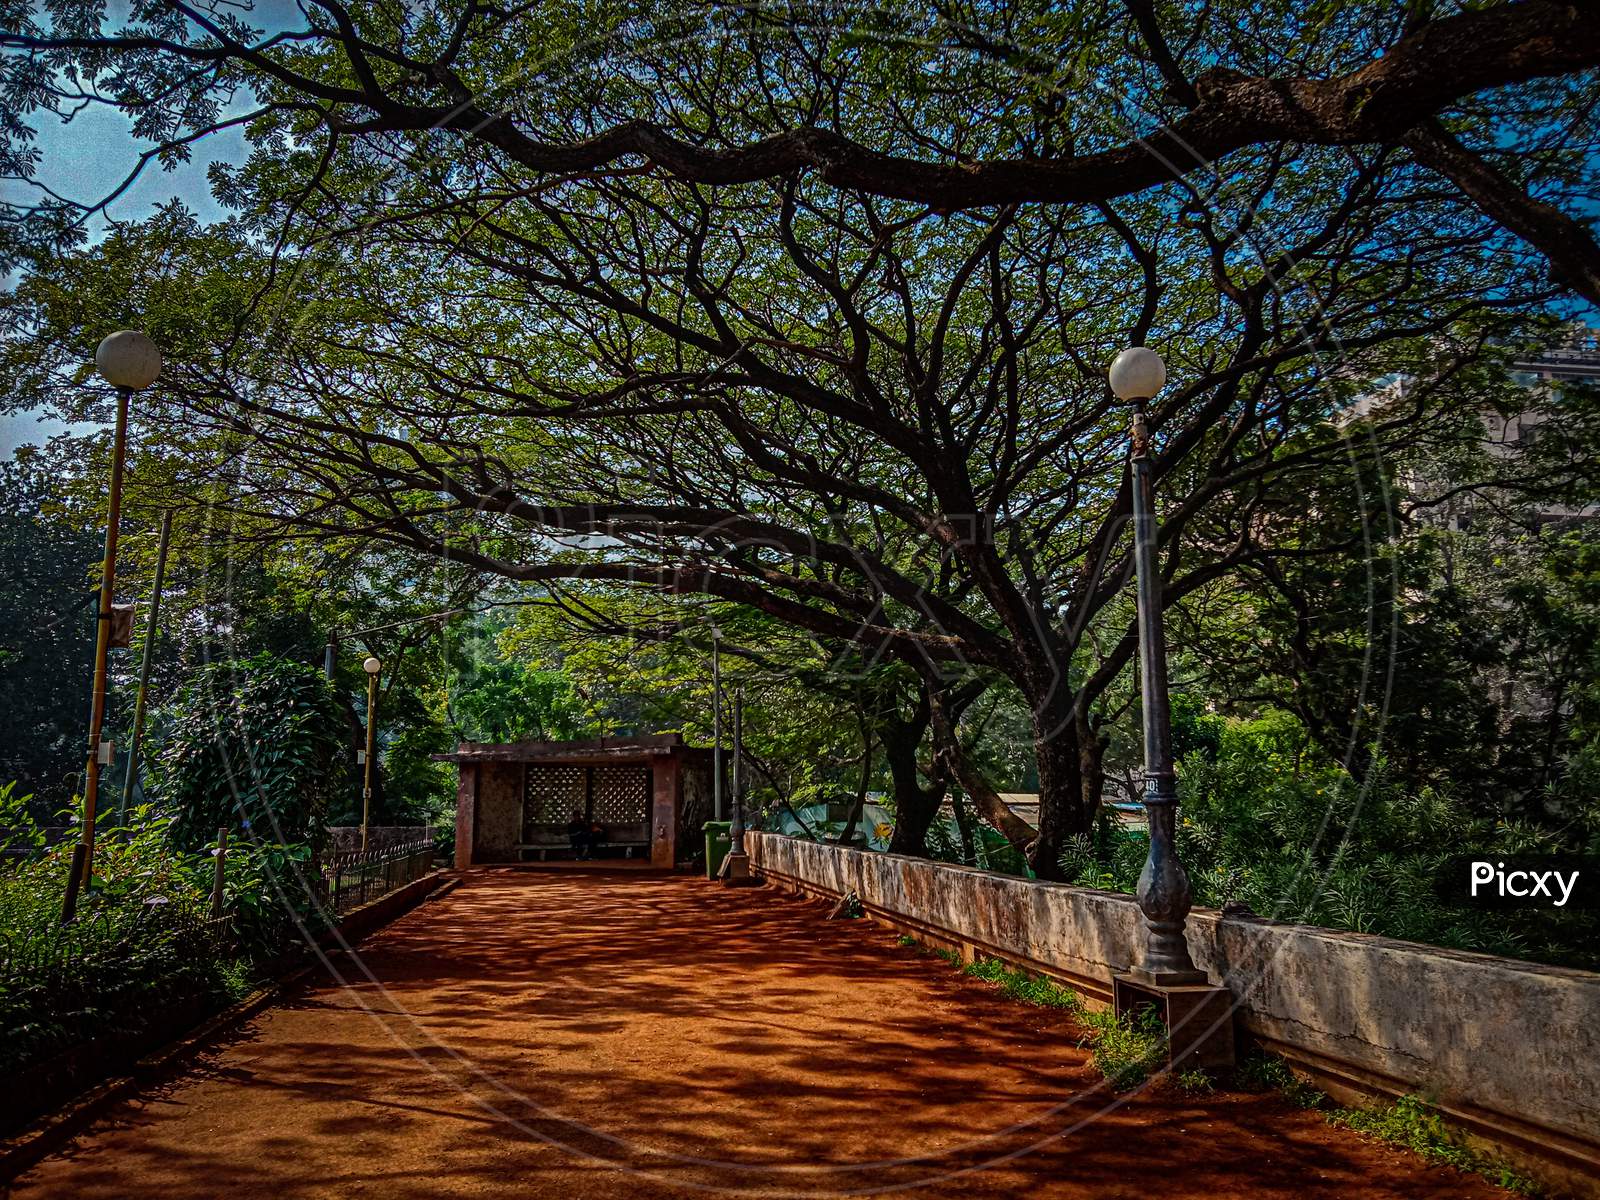 An aesthetic view of Botanical gardens in Mumbai .